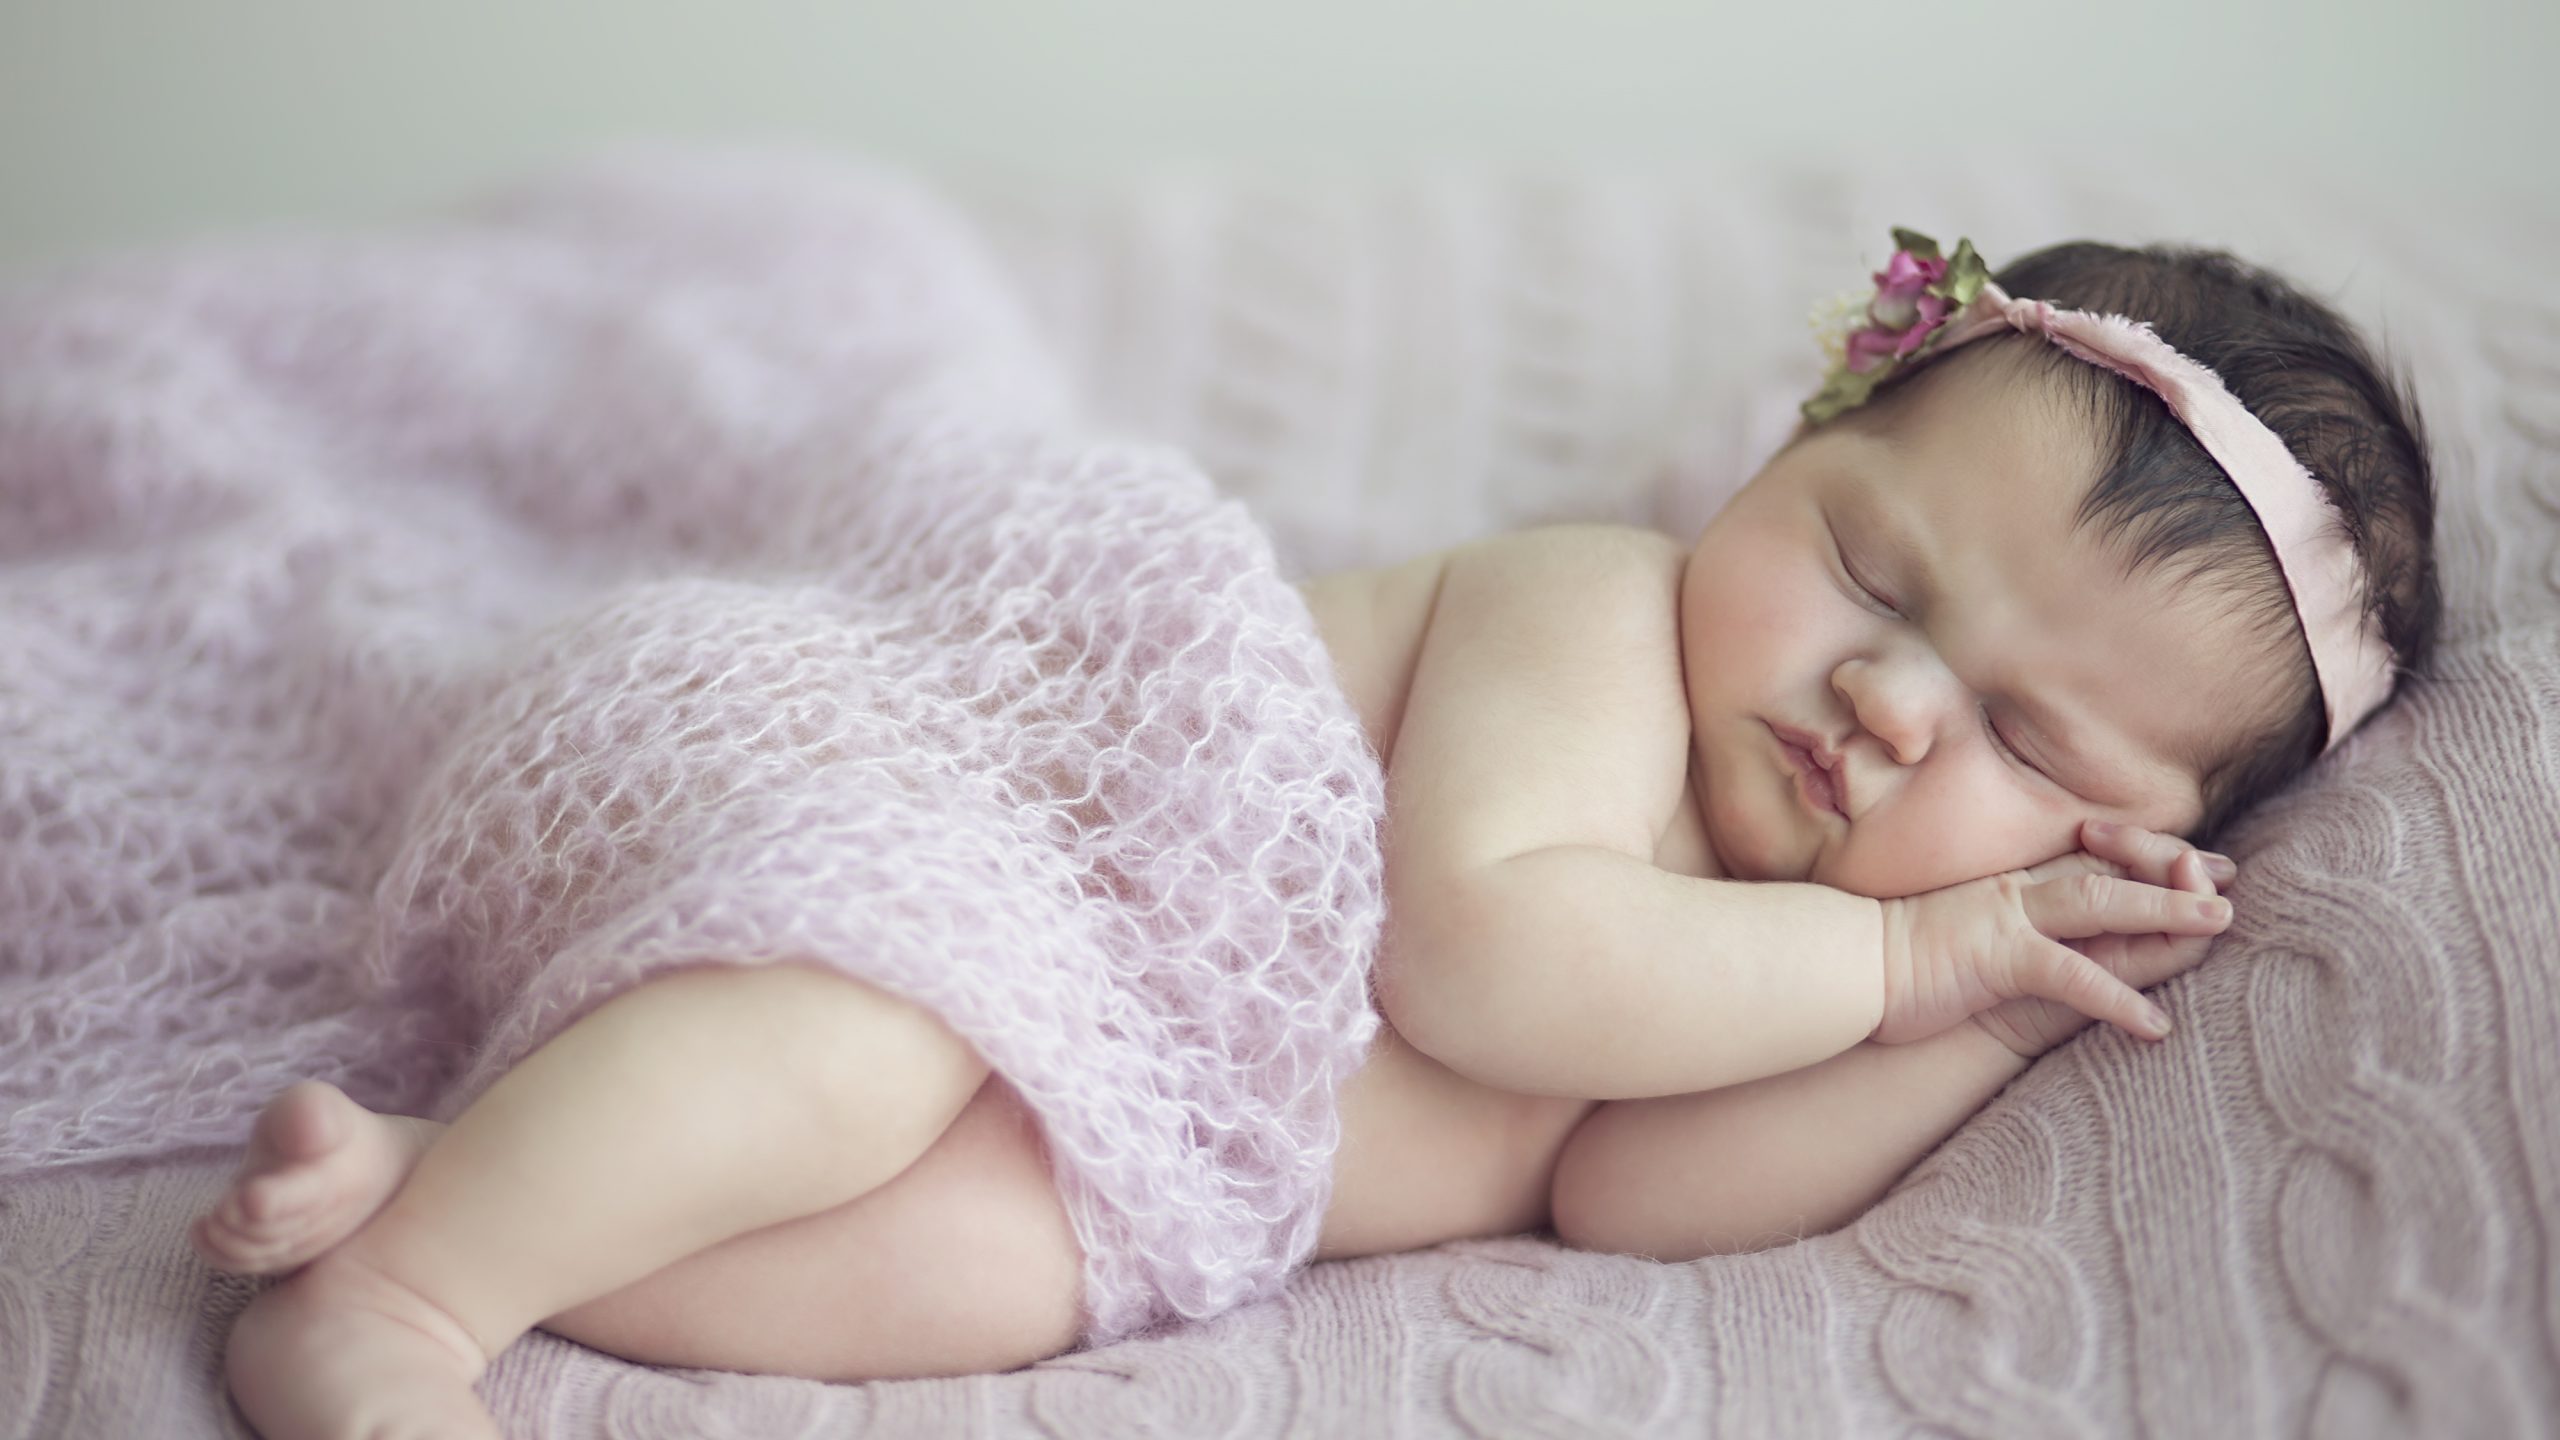 Sleeping Baby Images Hd - HD Wallpaper 